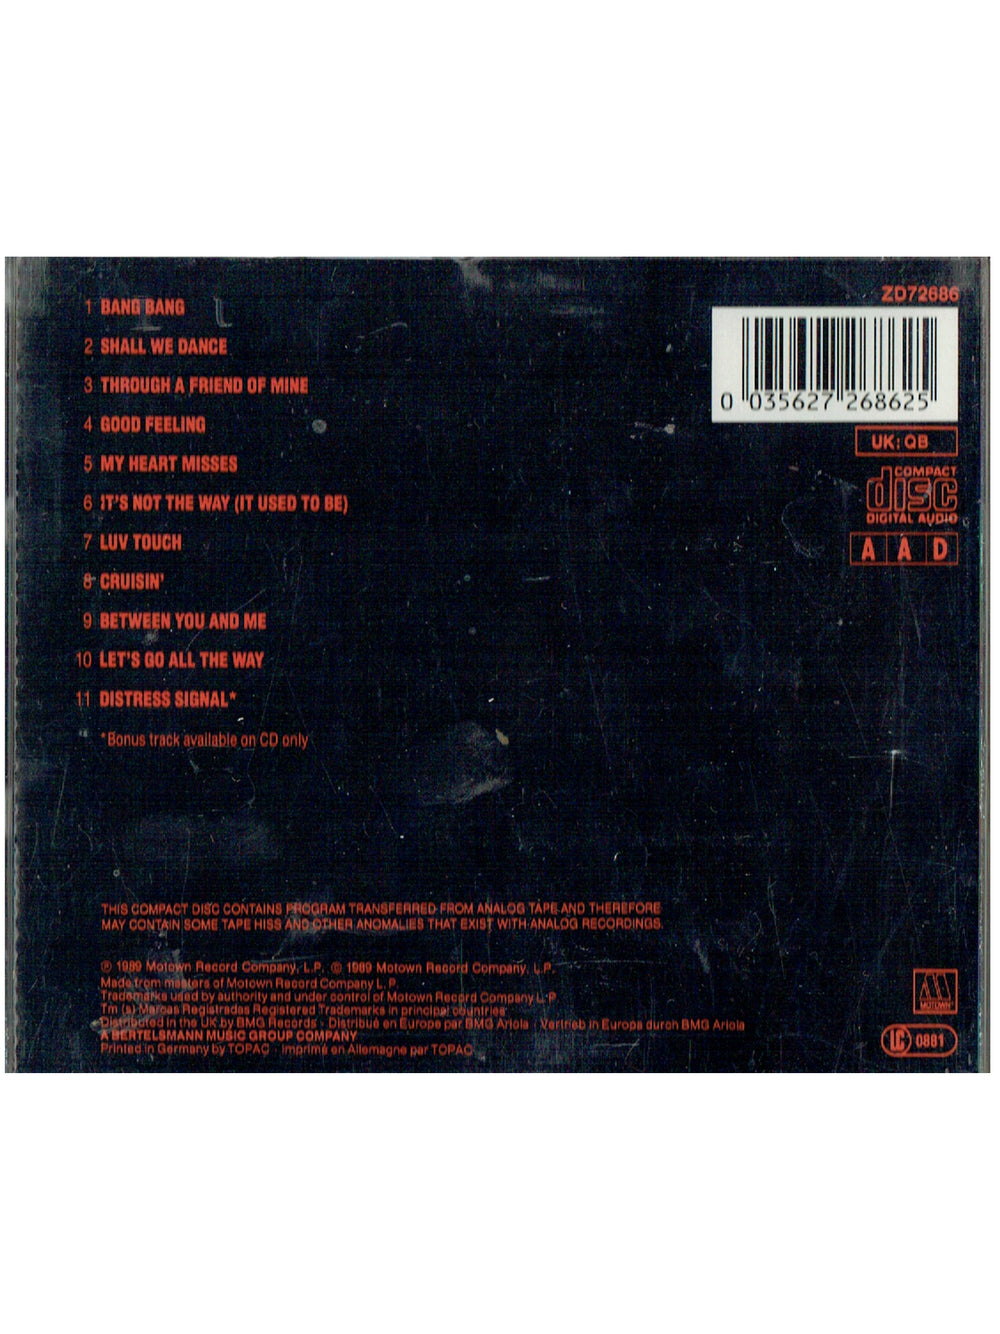 Prince – Brown Mark Good Feeling CD Album 1989 UK Release Prince Inc Bonus Track